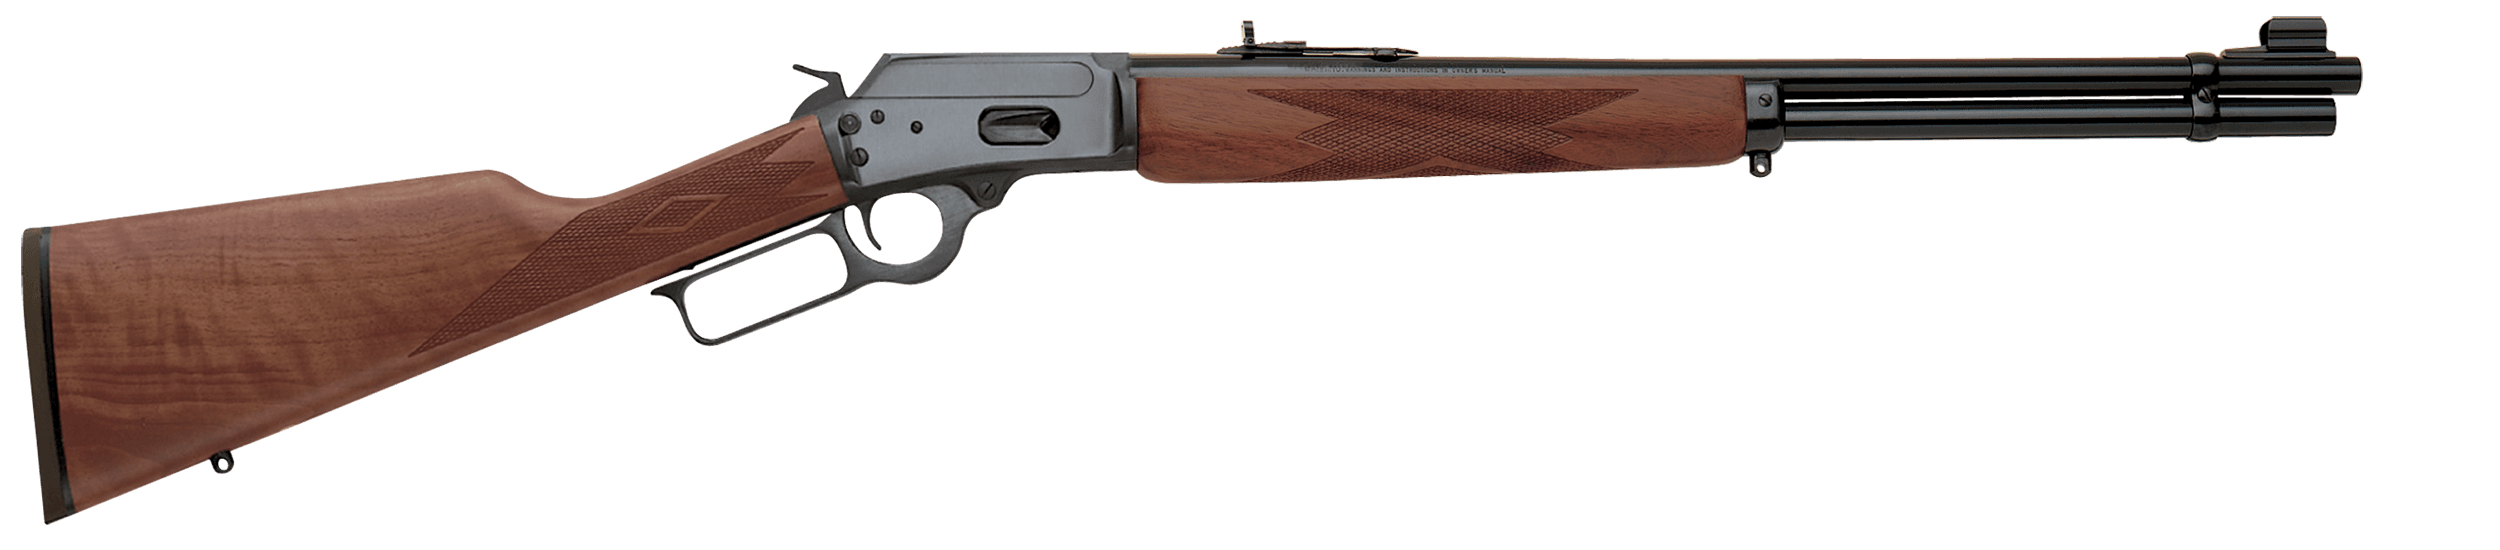 guns clipart lever action rifle